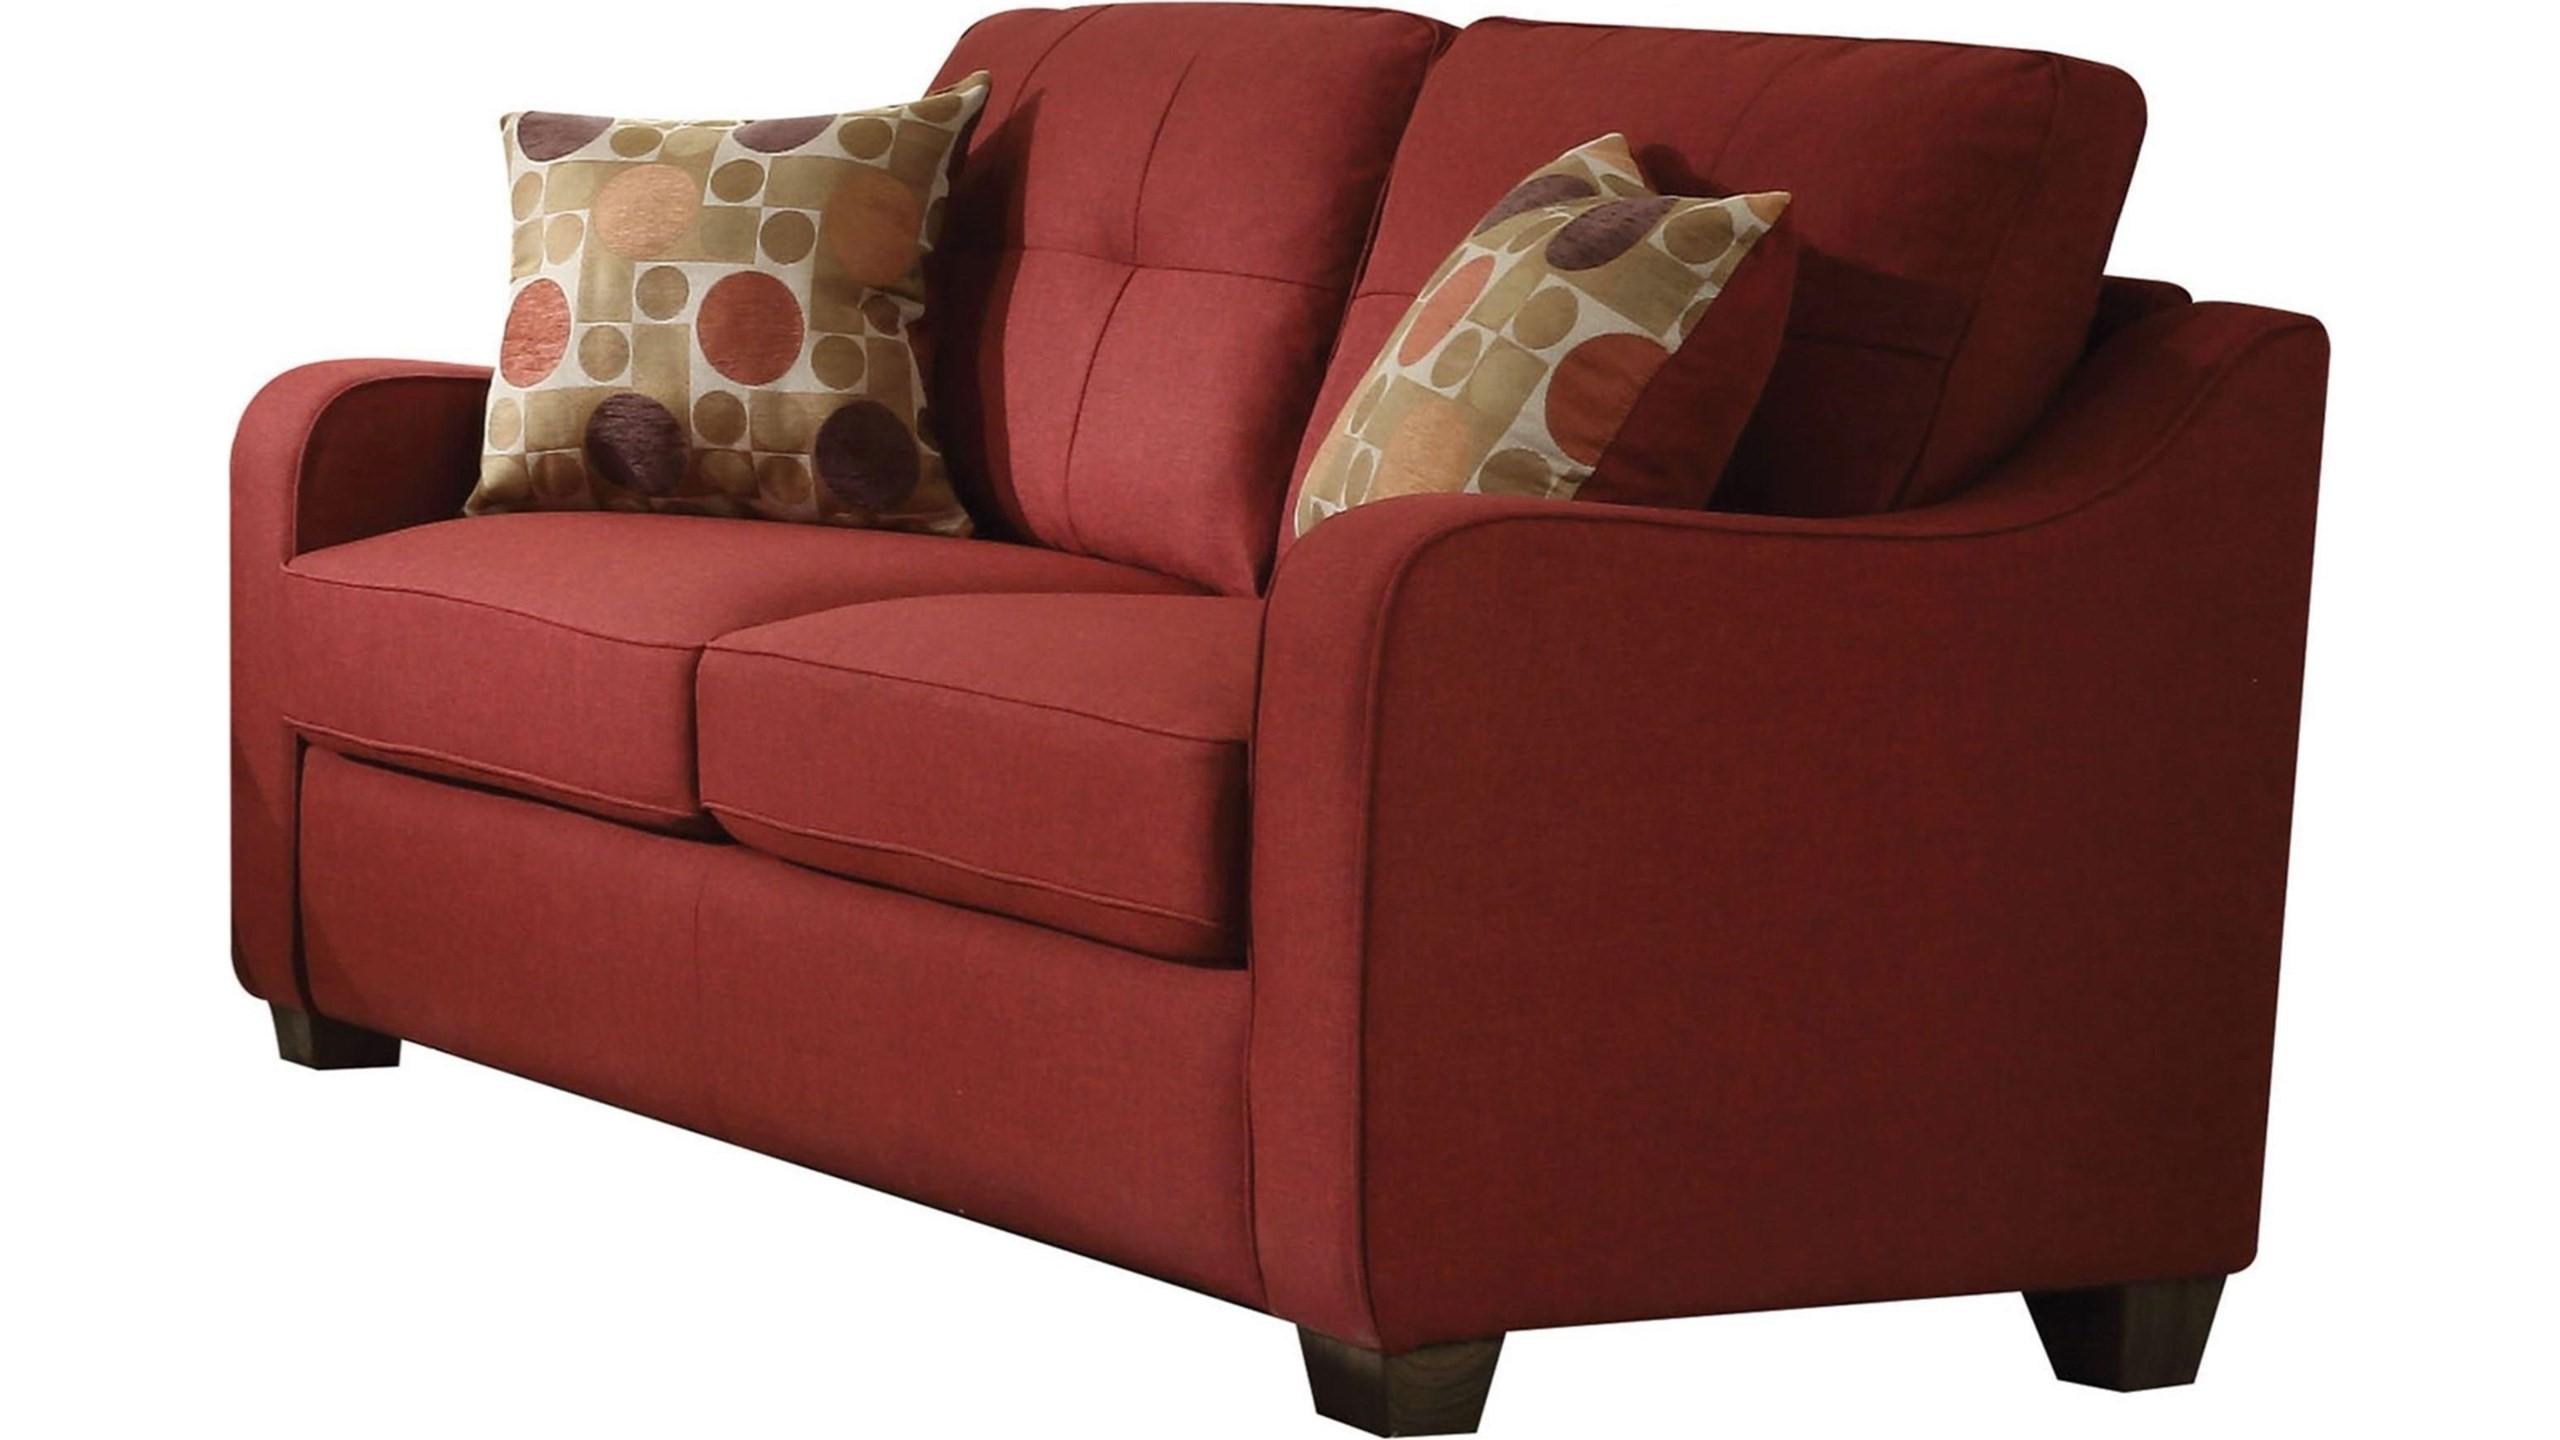 

    
Acme Furniture Cleavon II Sofa and Loveseat Red 53560-2pcs
